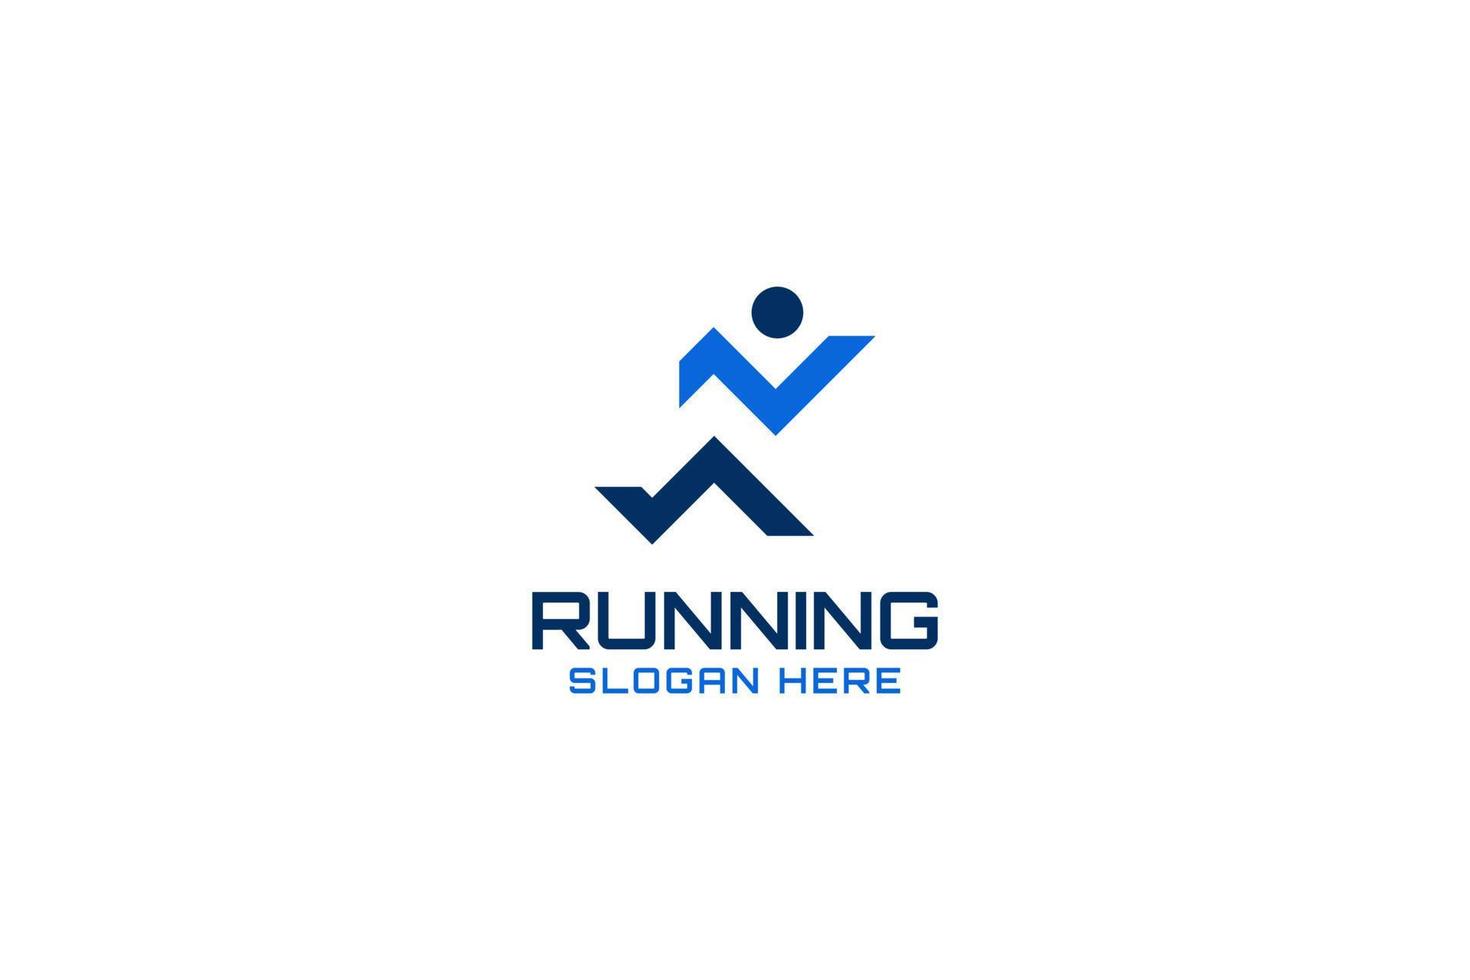 Flat runner athlete icon logo design vector template illustration